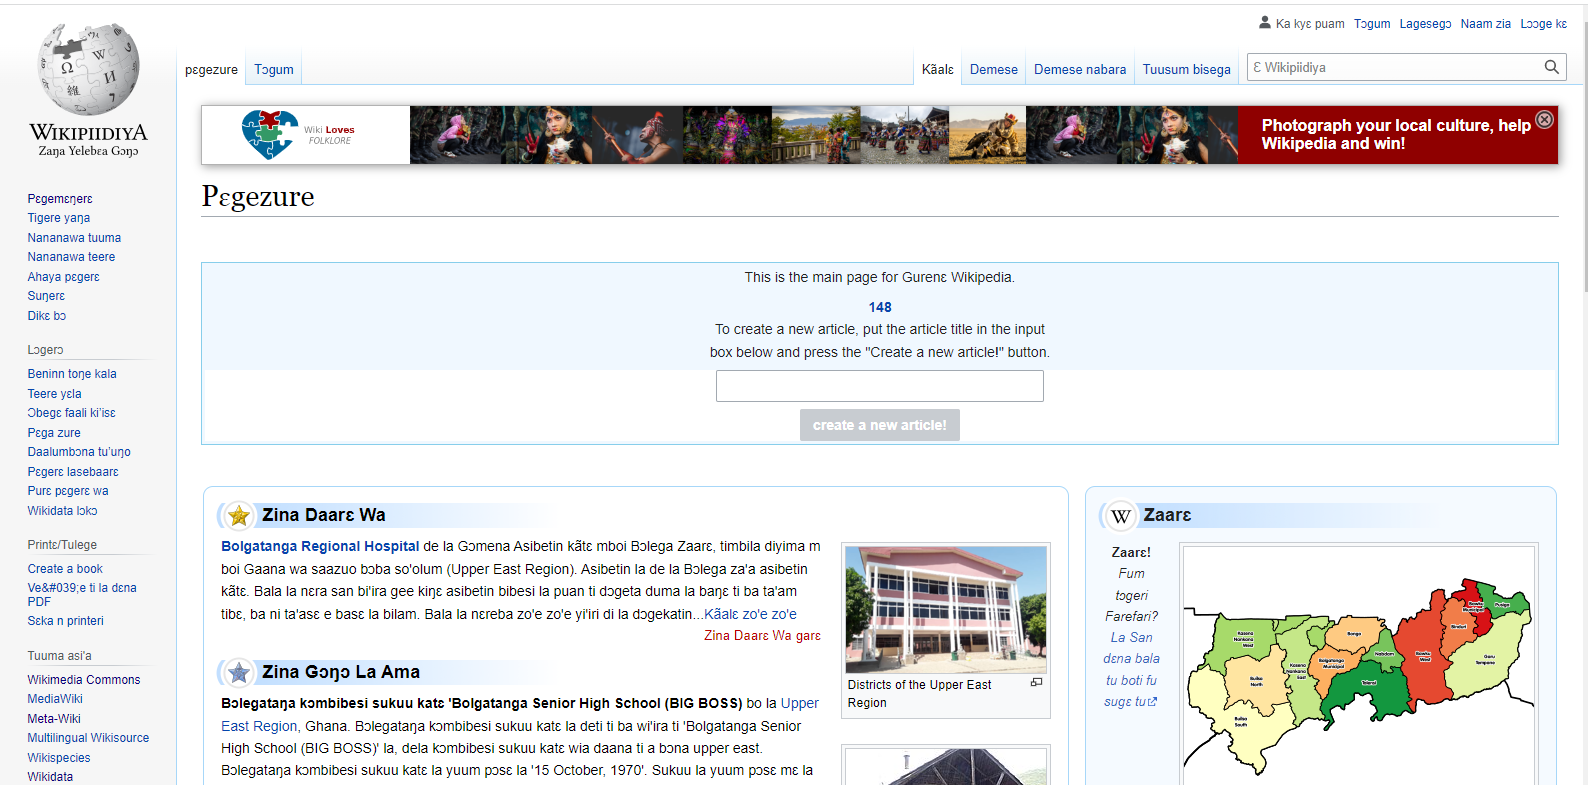 Gurene language goes live on Wikipedia